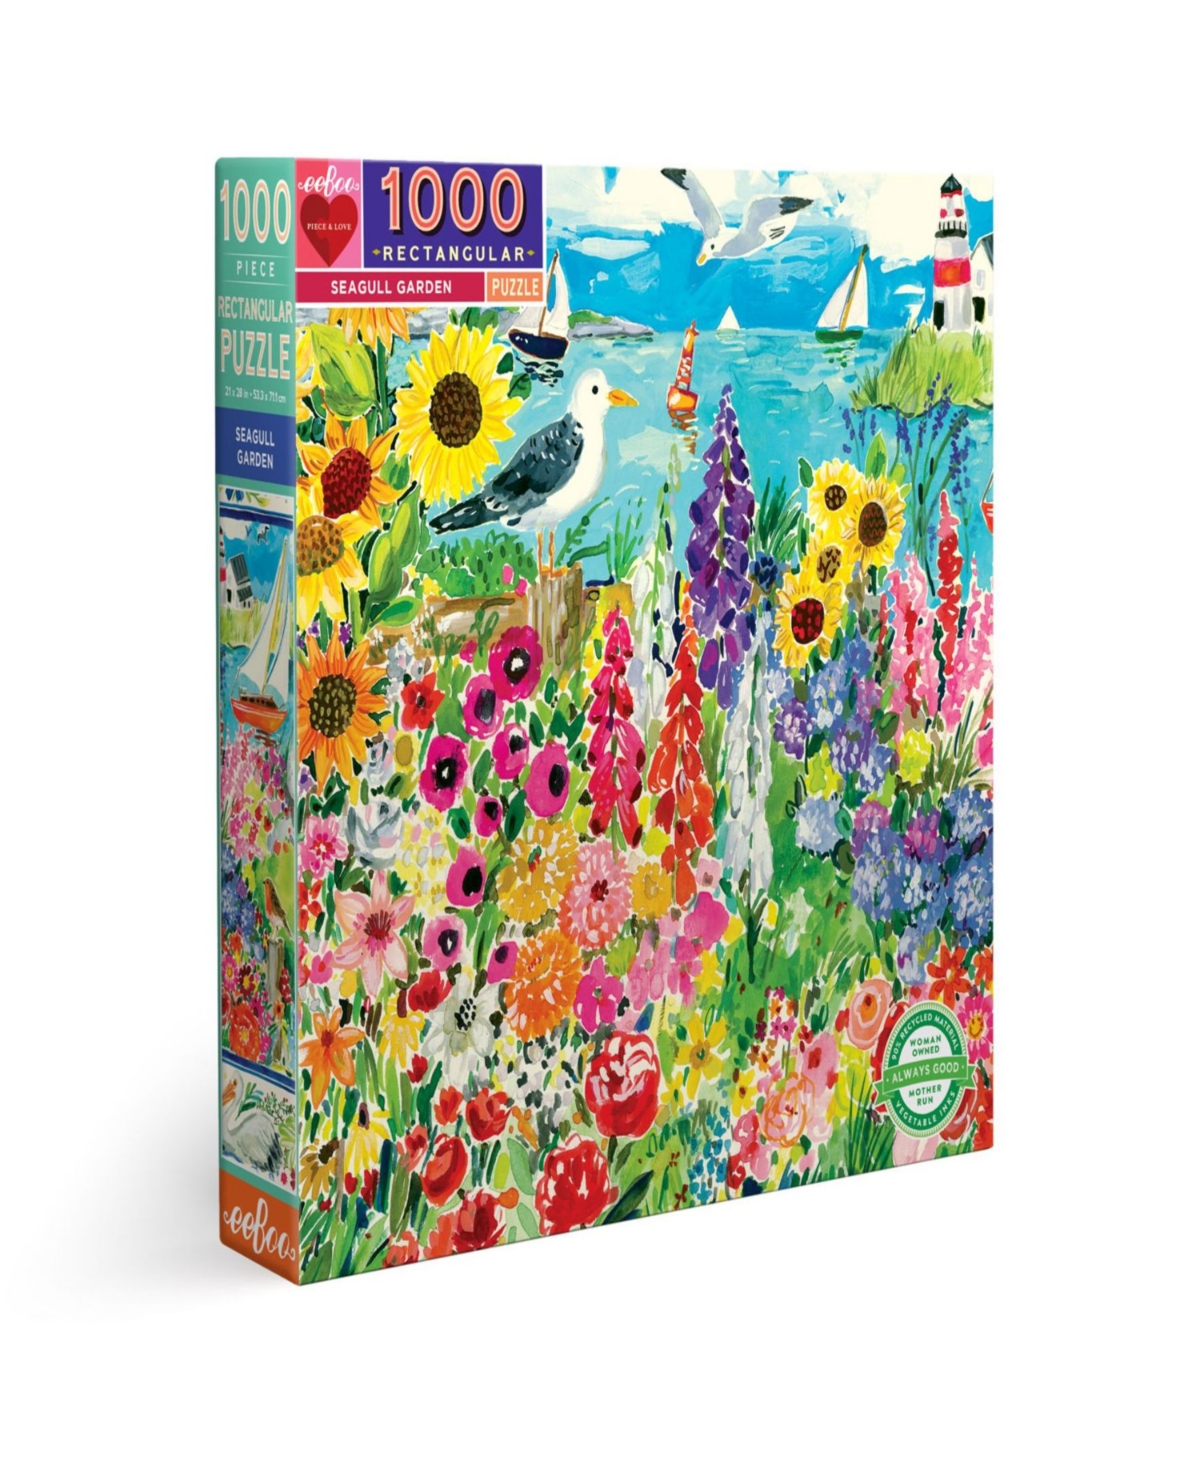 Eeboo Piece And Love Seagull Garden 1000 Piece Rectangular Adult Jigsaw Puzzle Set In Multi